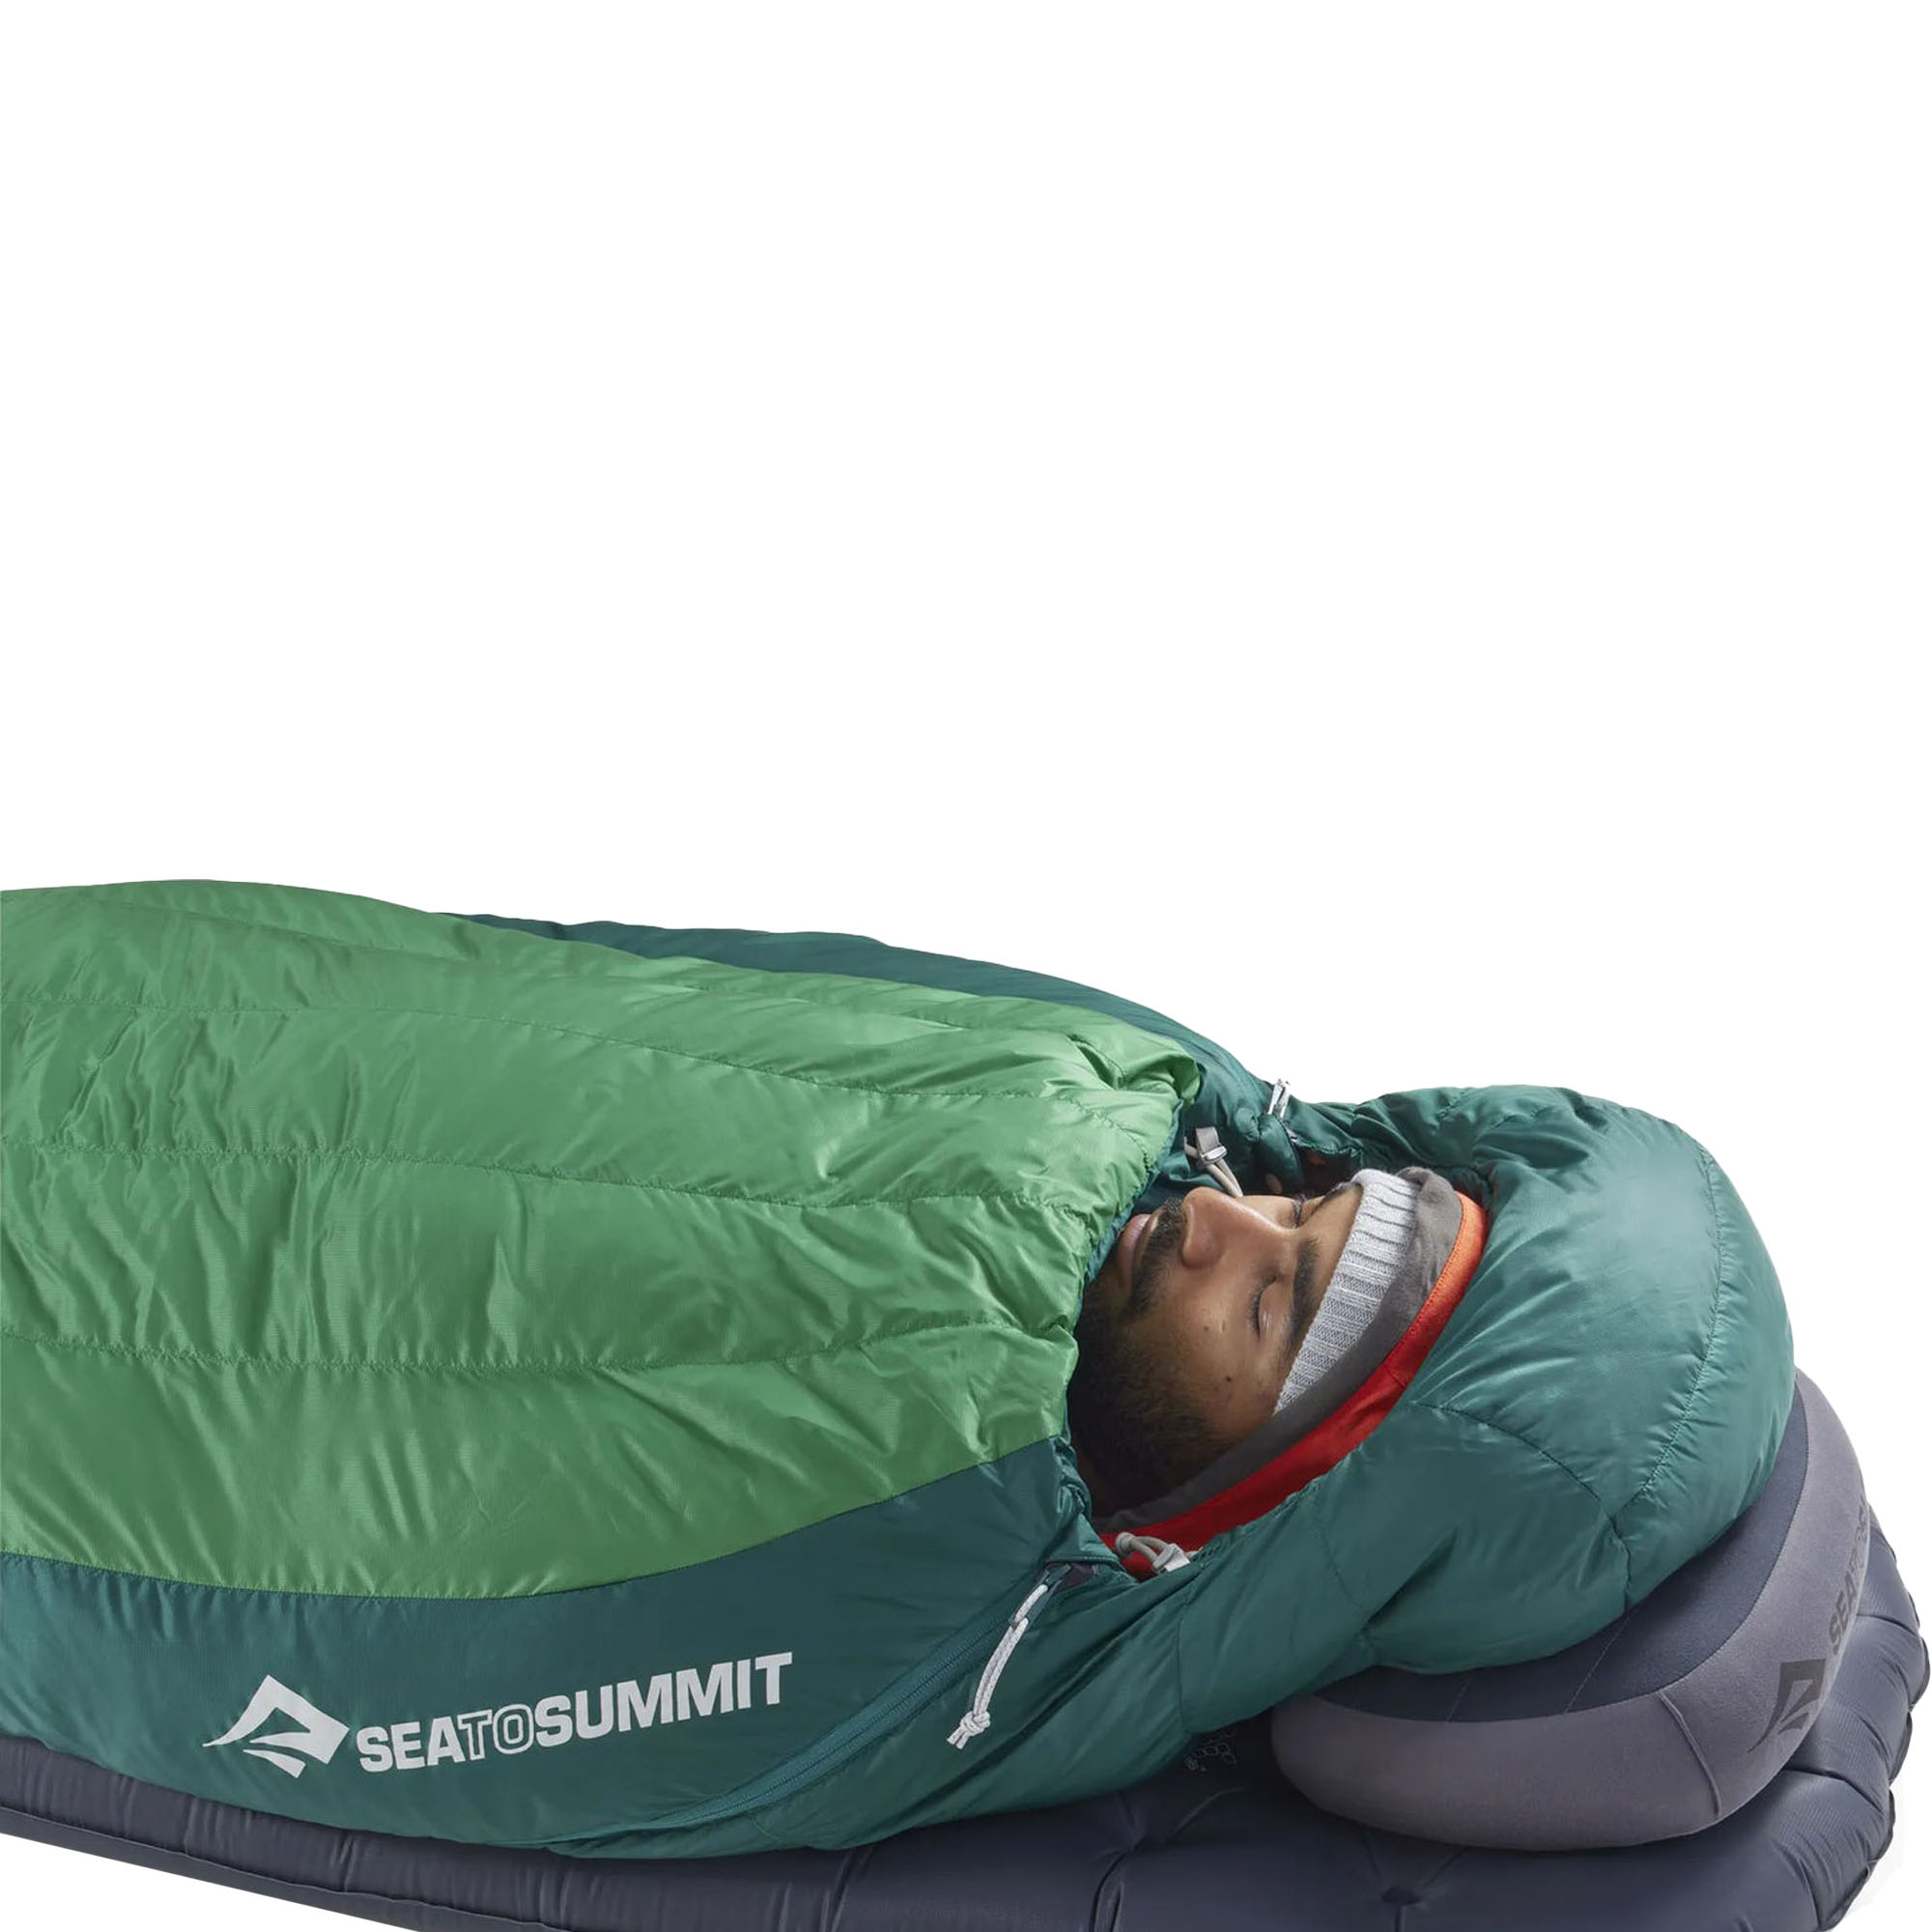 Sea to Summit Ascent -1C Regular Down Sleeping Bag